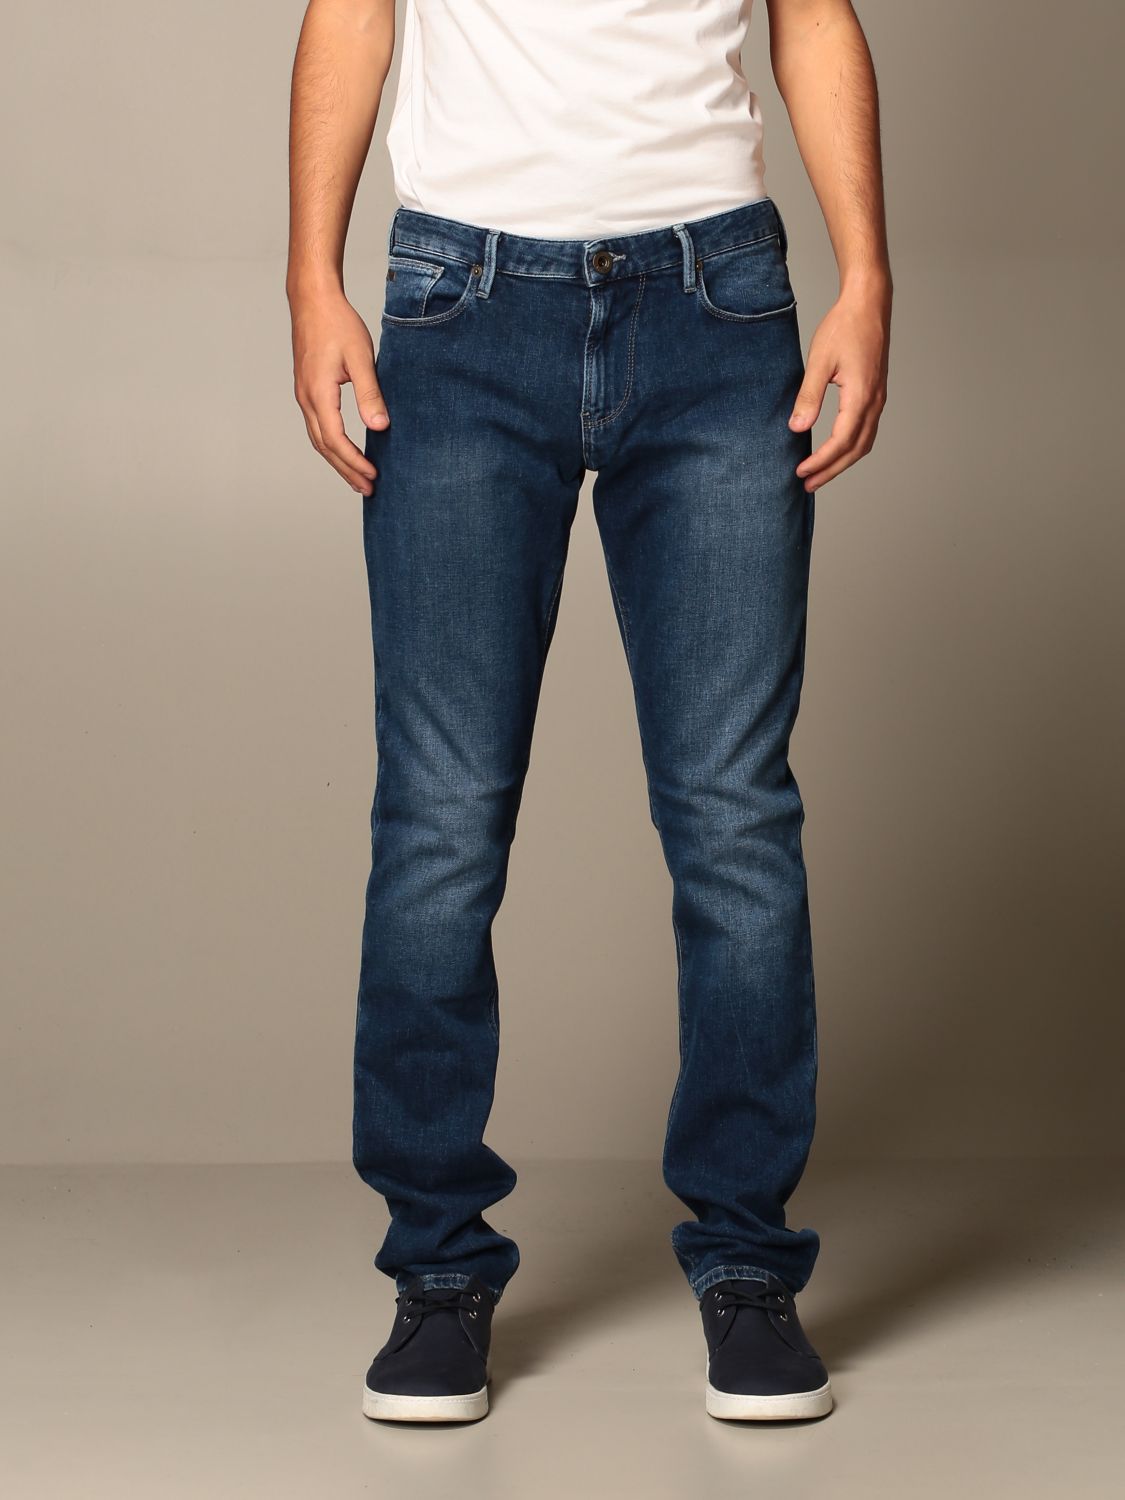 Emporio Armani Outlet: jeans used stretch denim Denim | Emporio Armani 6H1J06 1DL6Z on GIGLIO.COM